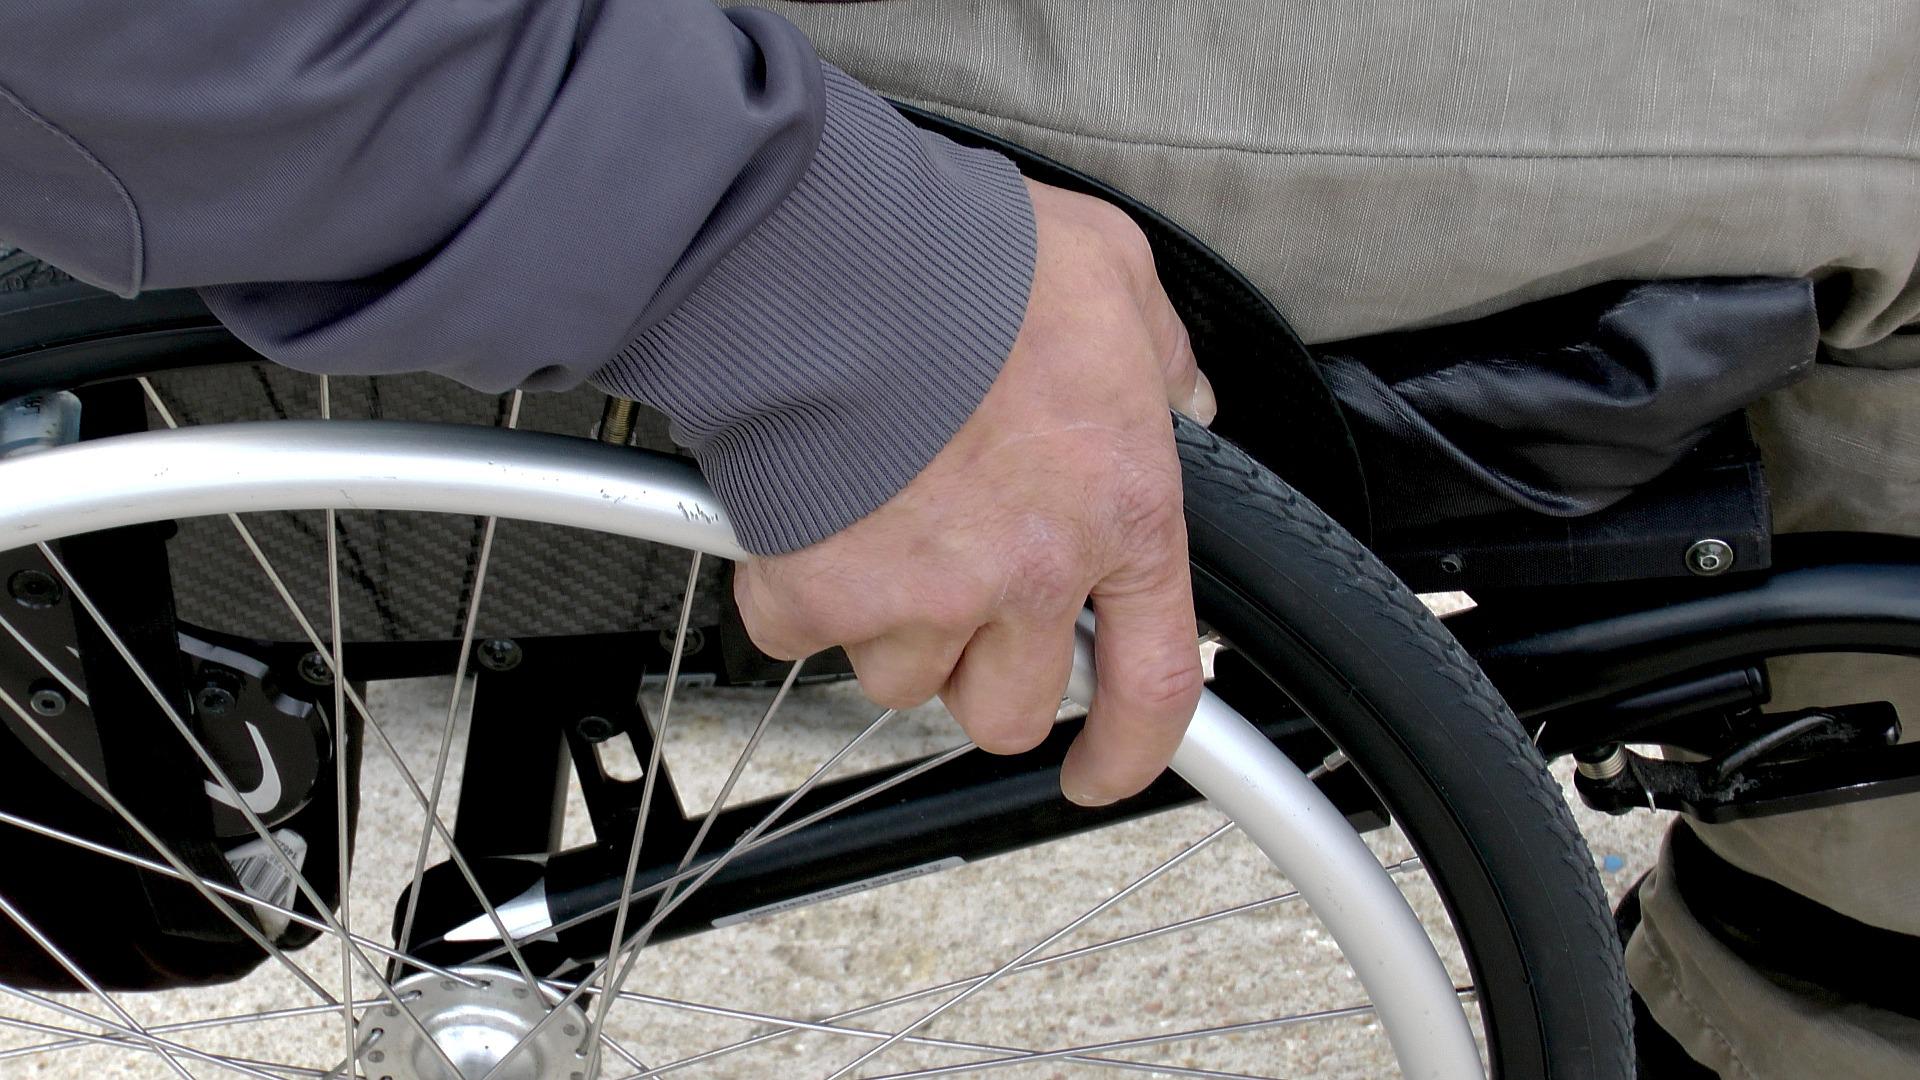 A person's hand using a wheelchair